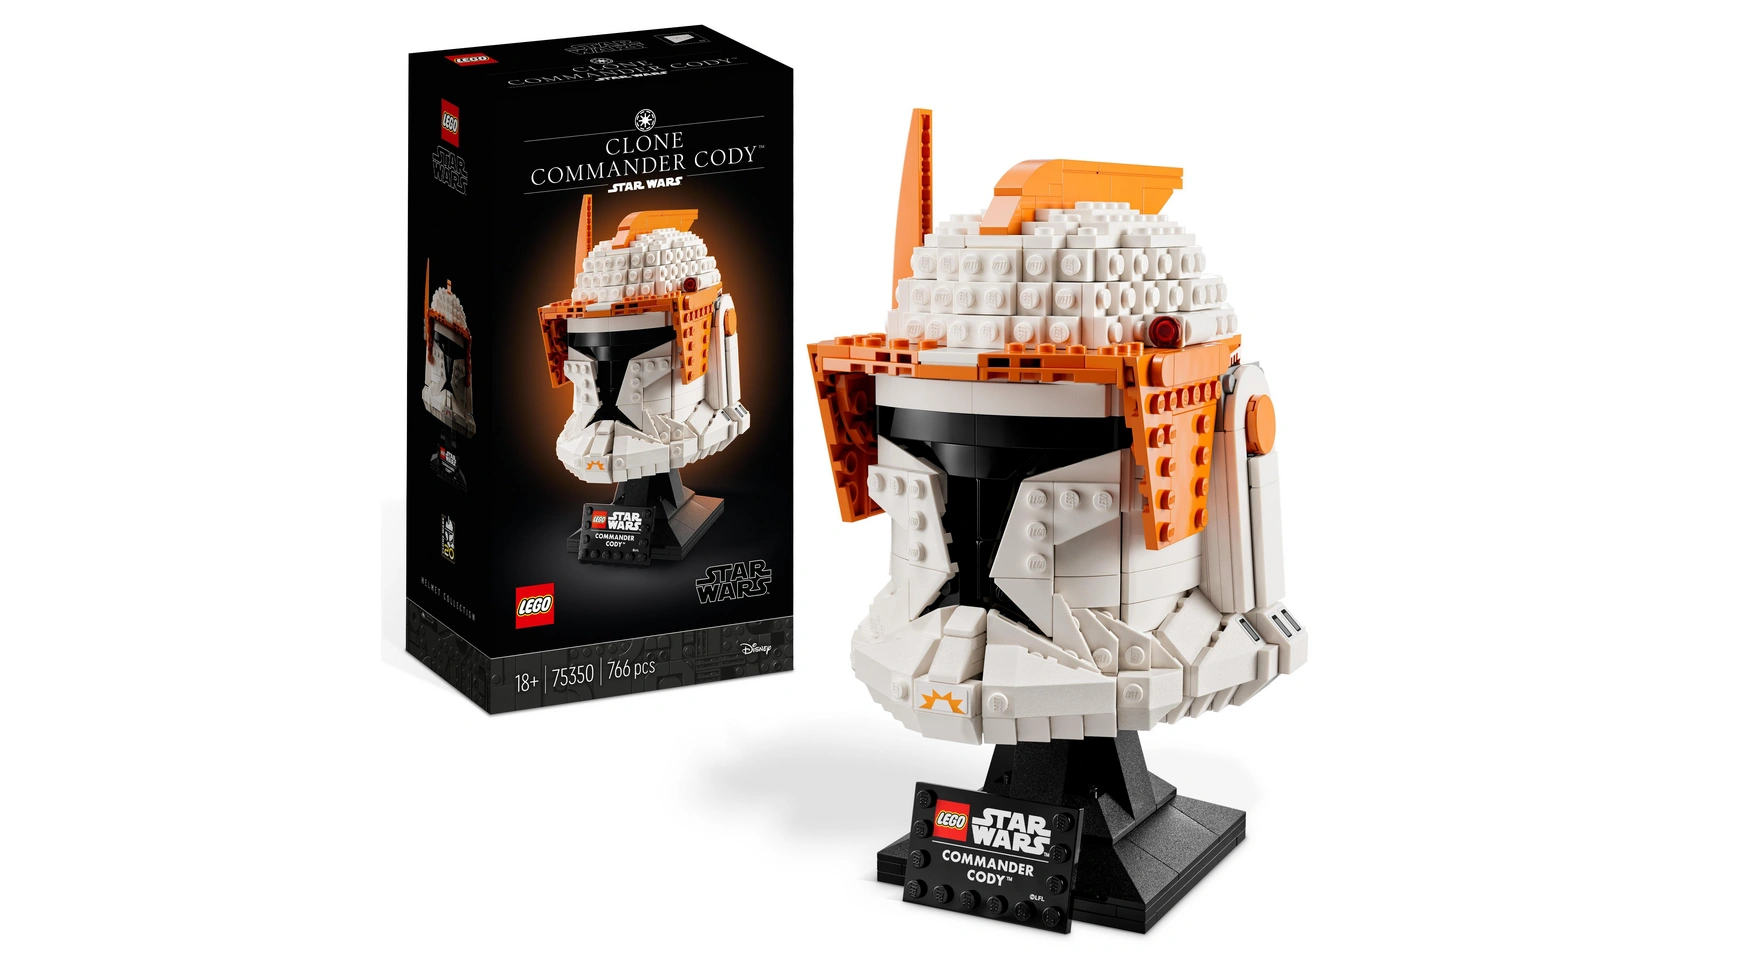 цена Lego Star Wars Набор шлемов командира клонов Коди для взрослых